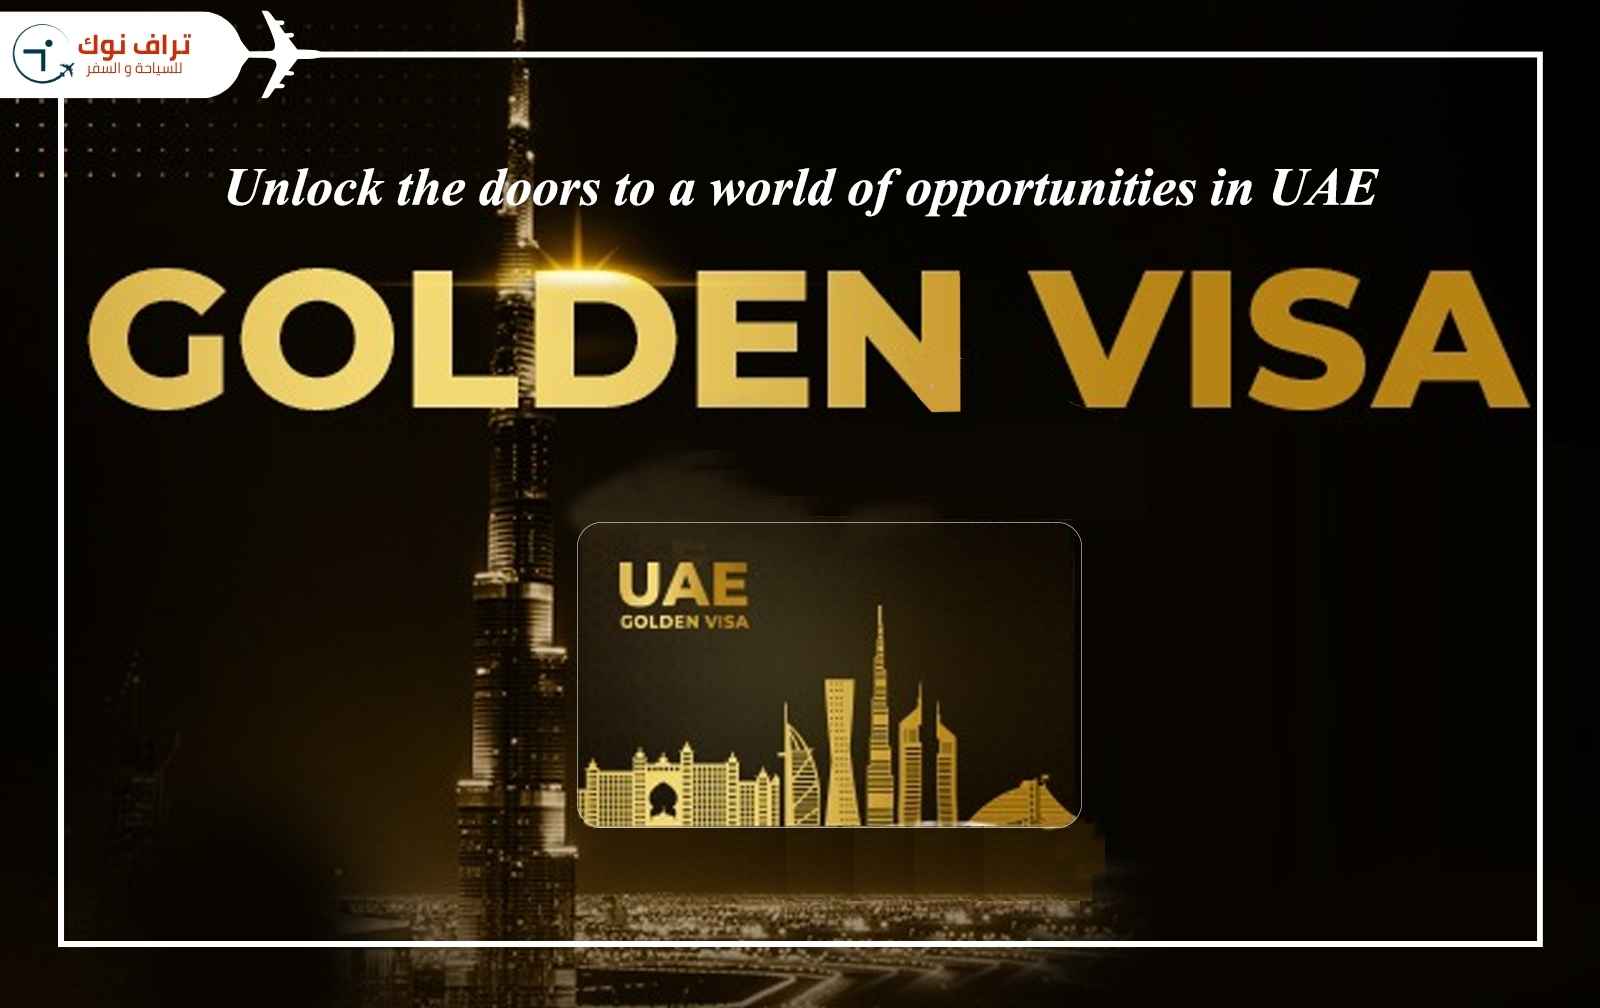 Visa-free countries for UAE golden visa holders